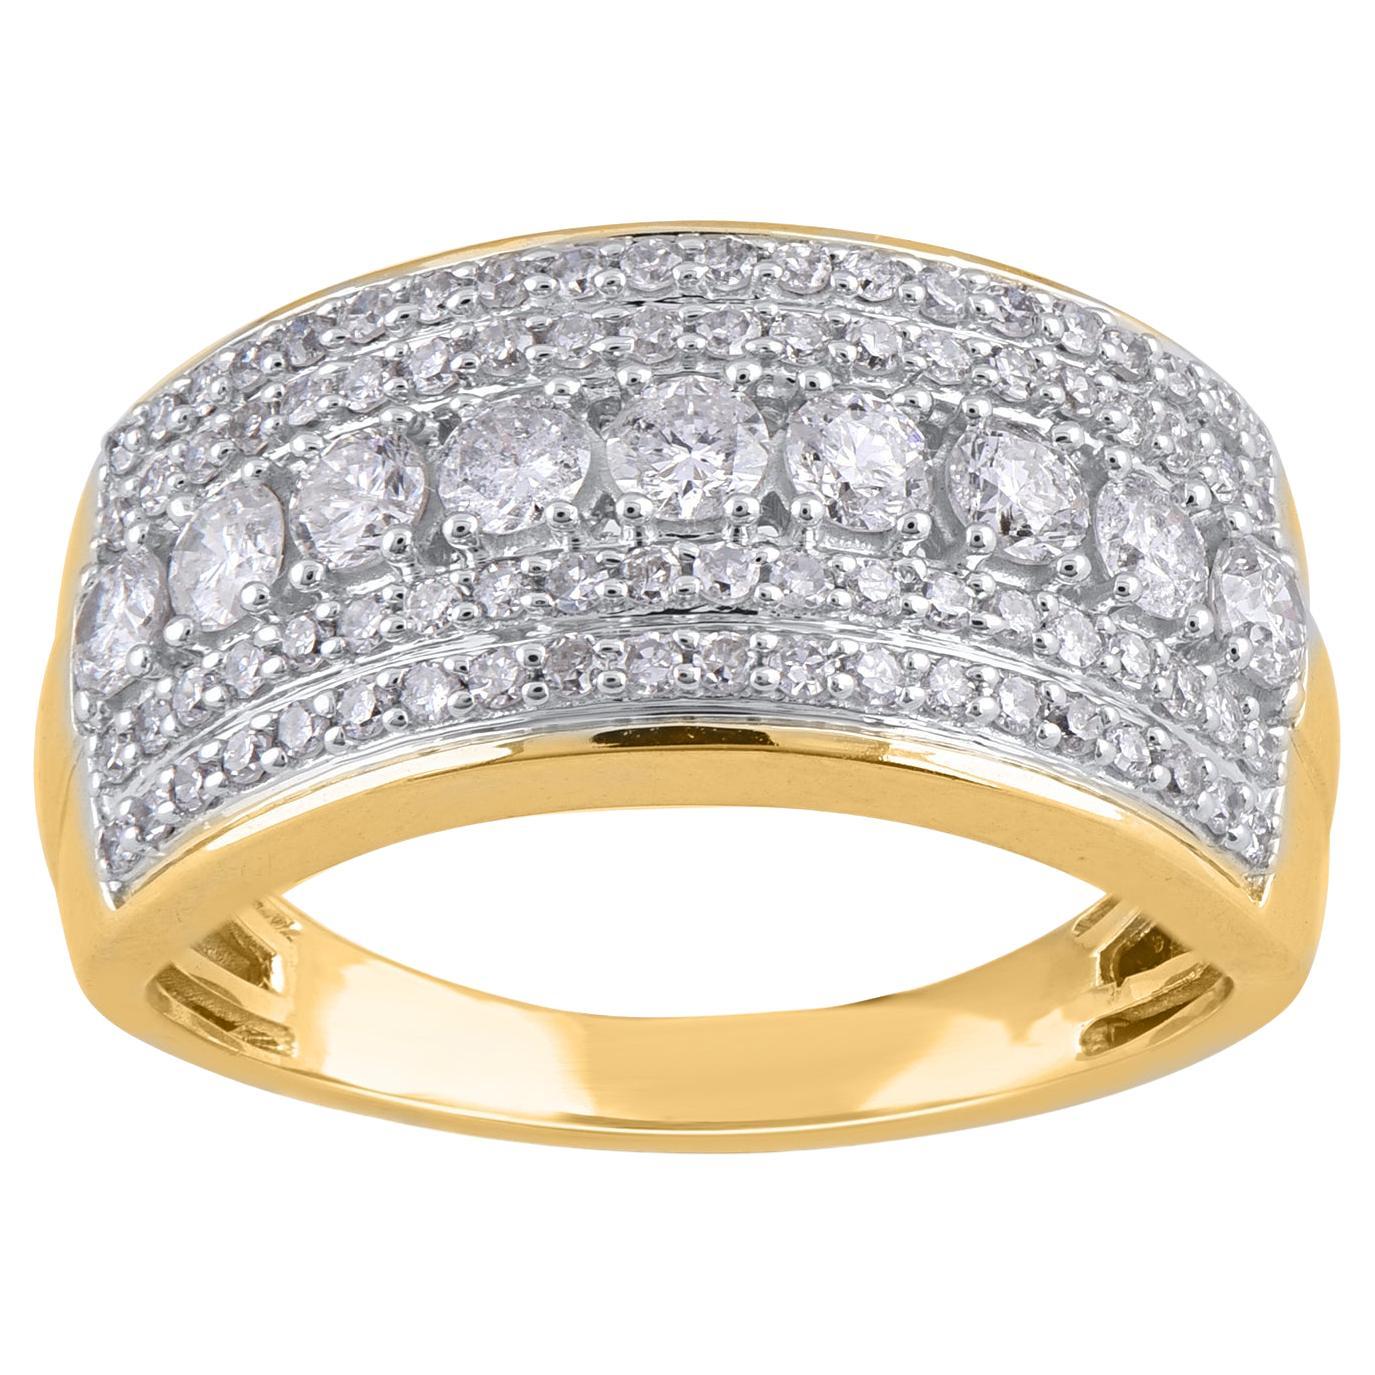 TJD 1.0 Carat Round Cut Diamond 14KT Yellow Gold Wedding Band Ring